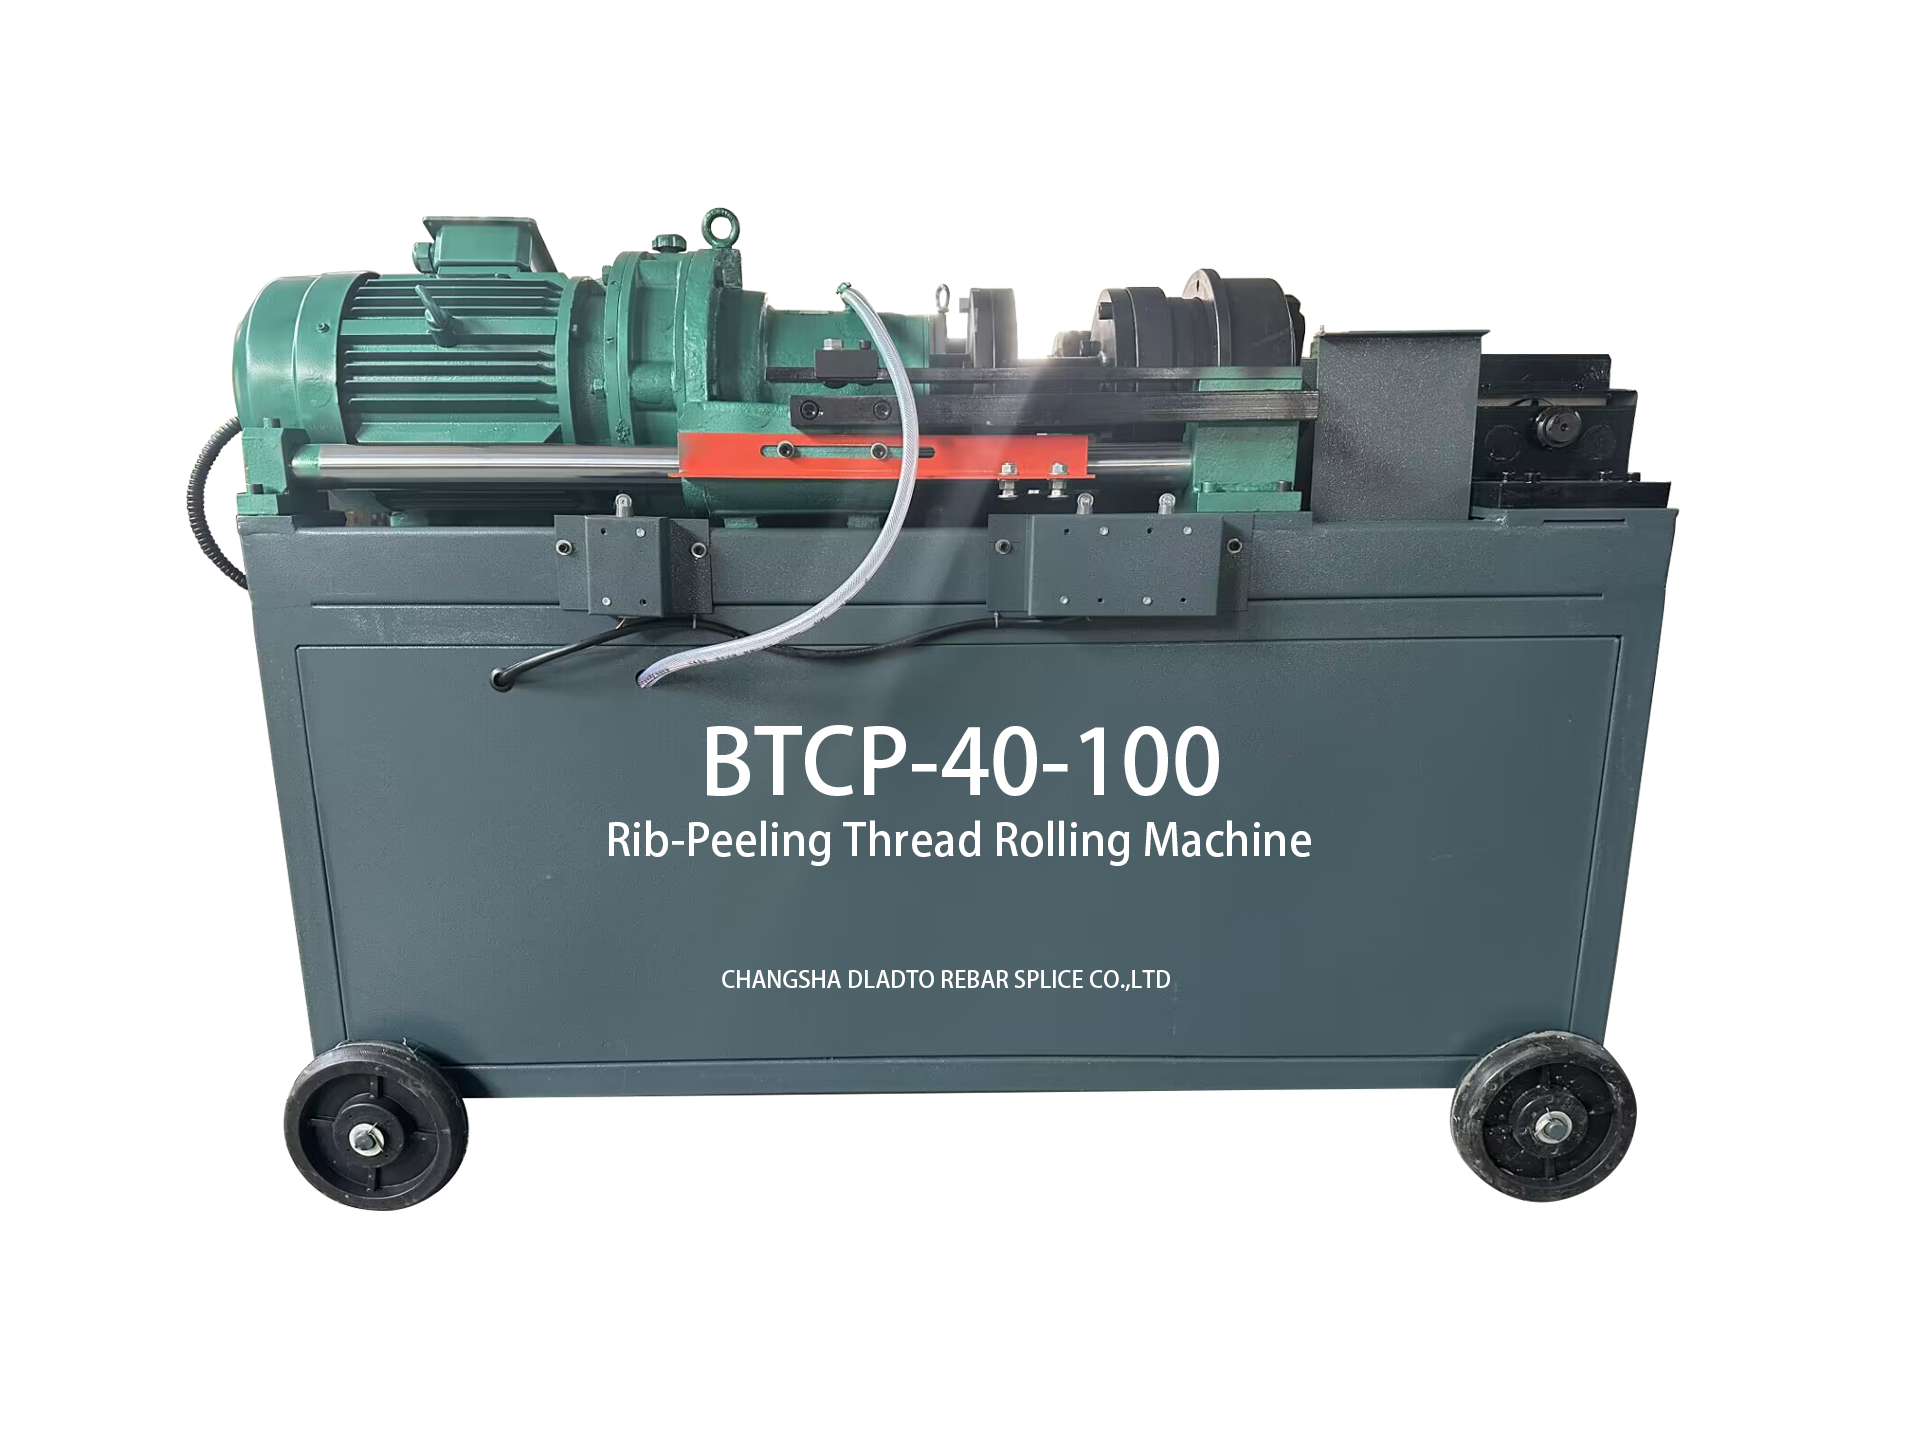 Rebar Rib -peeling And Threading Roller Machine BTCP-40-100